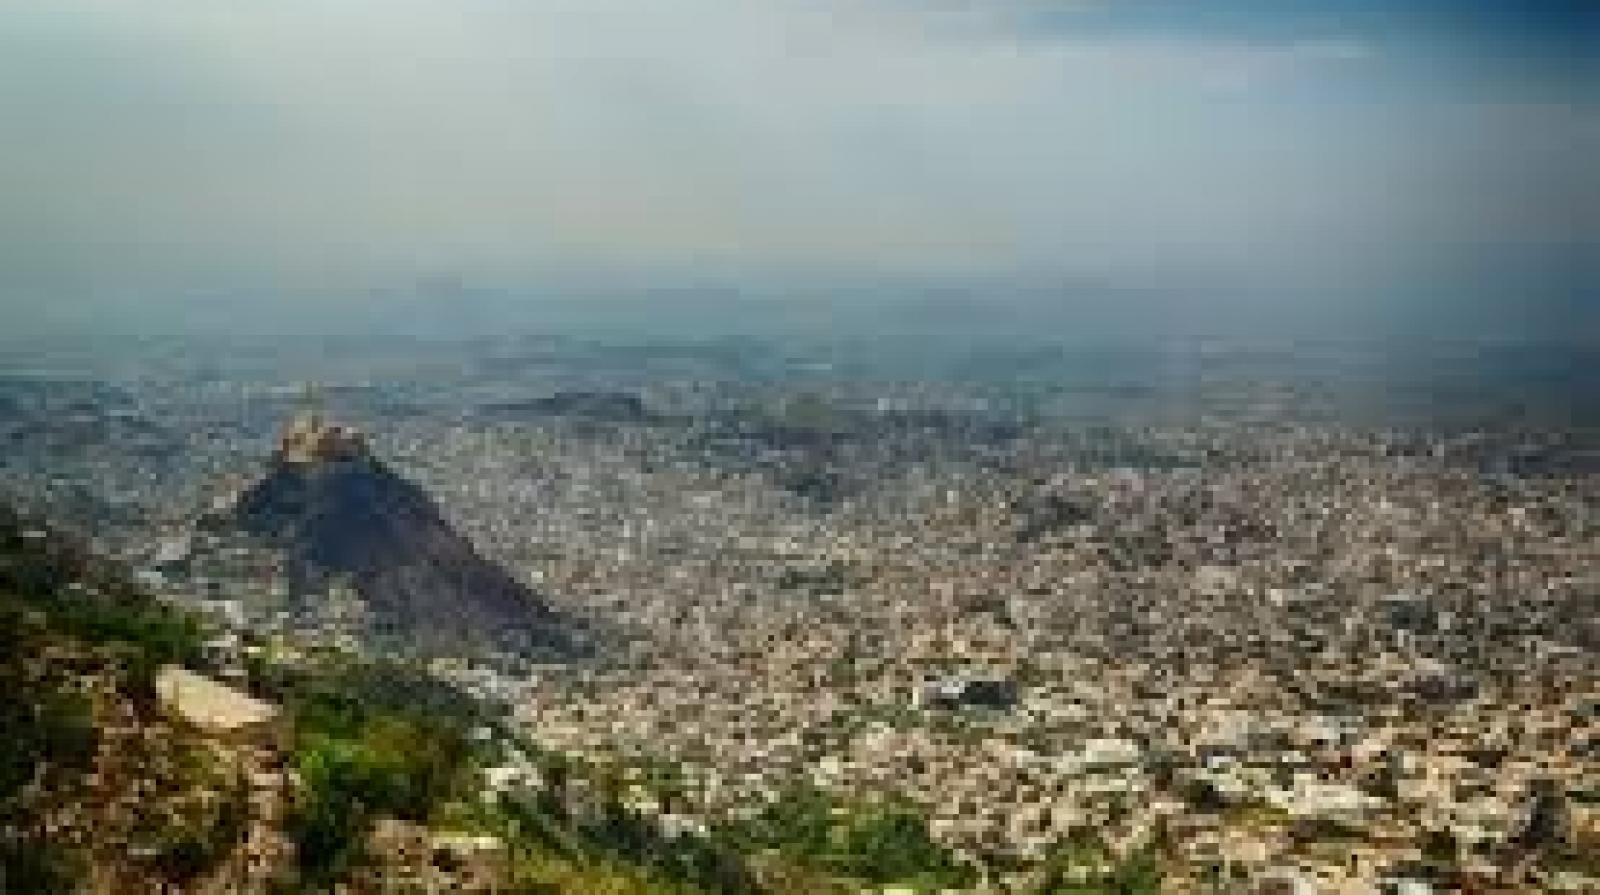 General view of Al-Qahirah Castle aand the city of Taiz, Yemen Press Agency, 31 August 2020